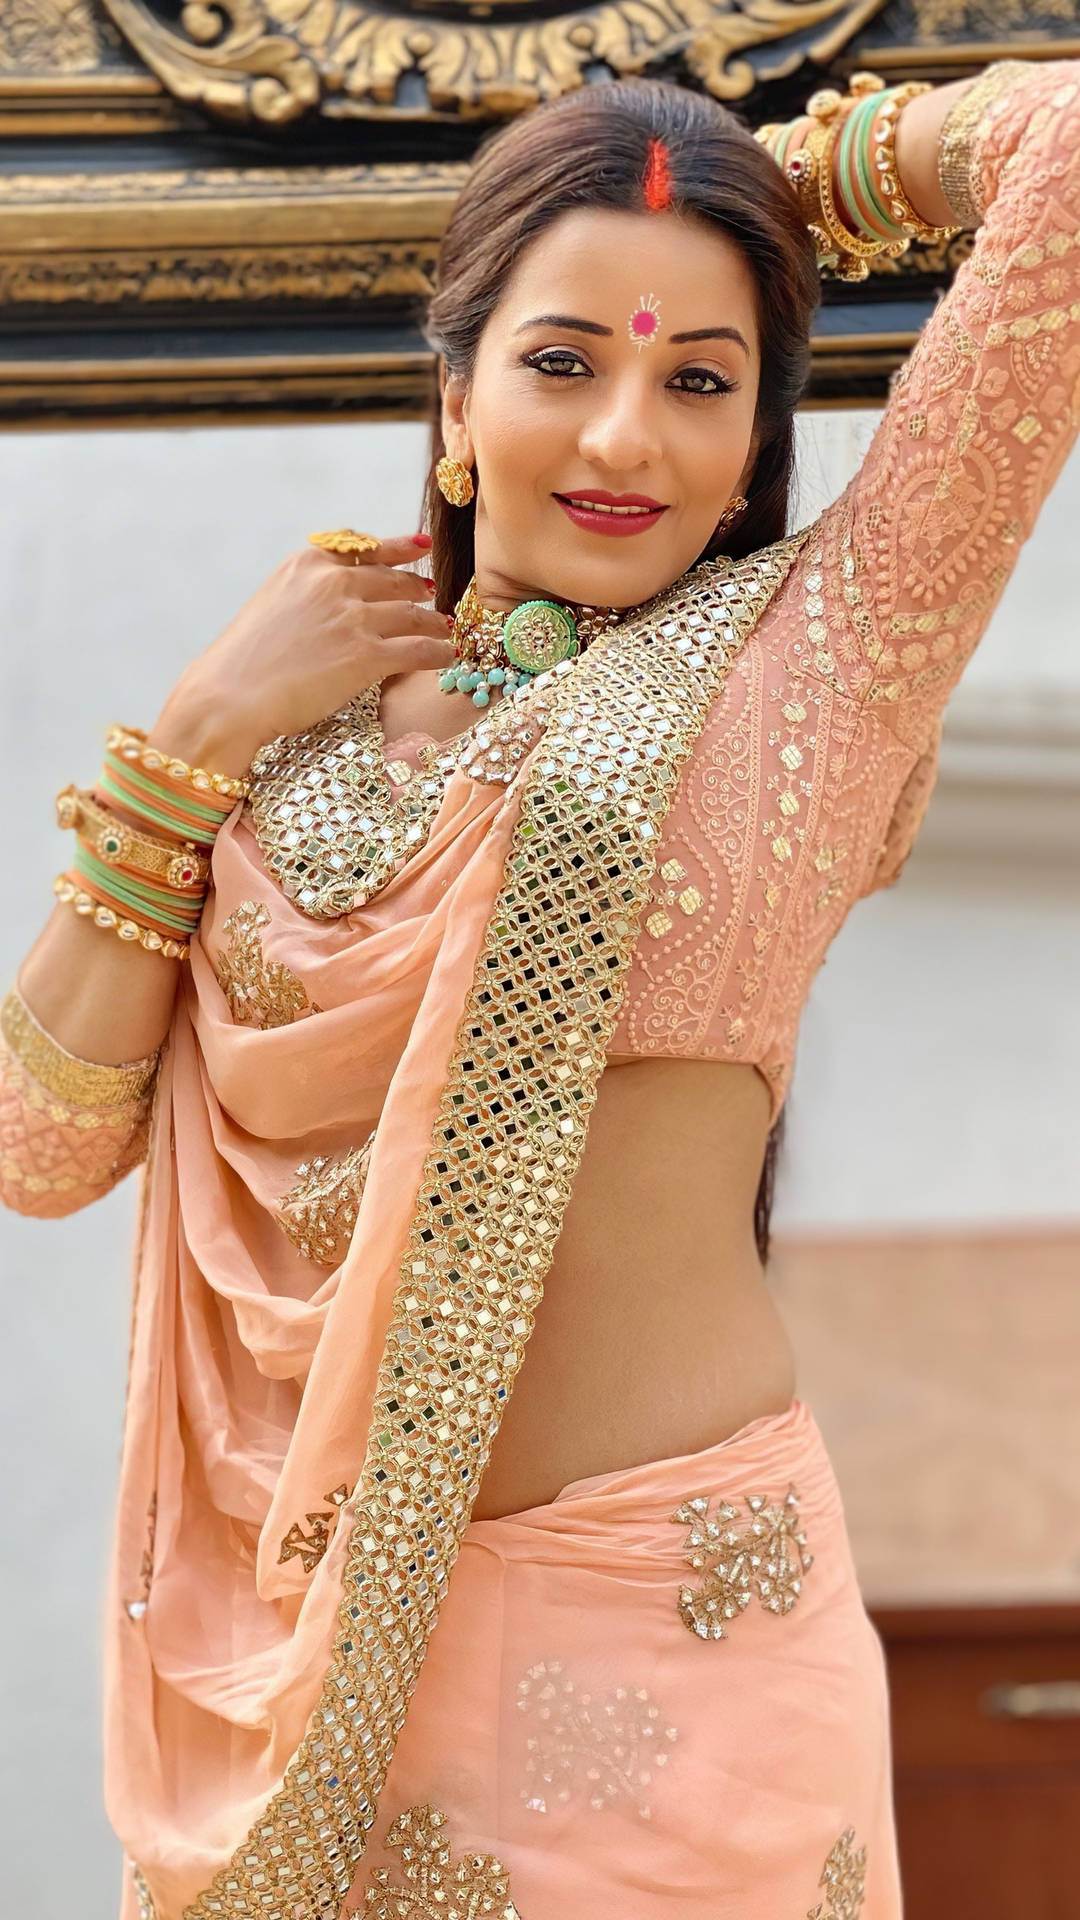 Bhojpuri Actress Images Wallpaper Photo Pics Download  78 भजपर एकटरस